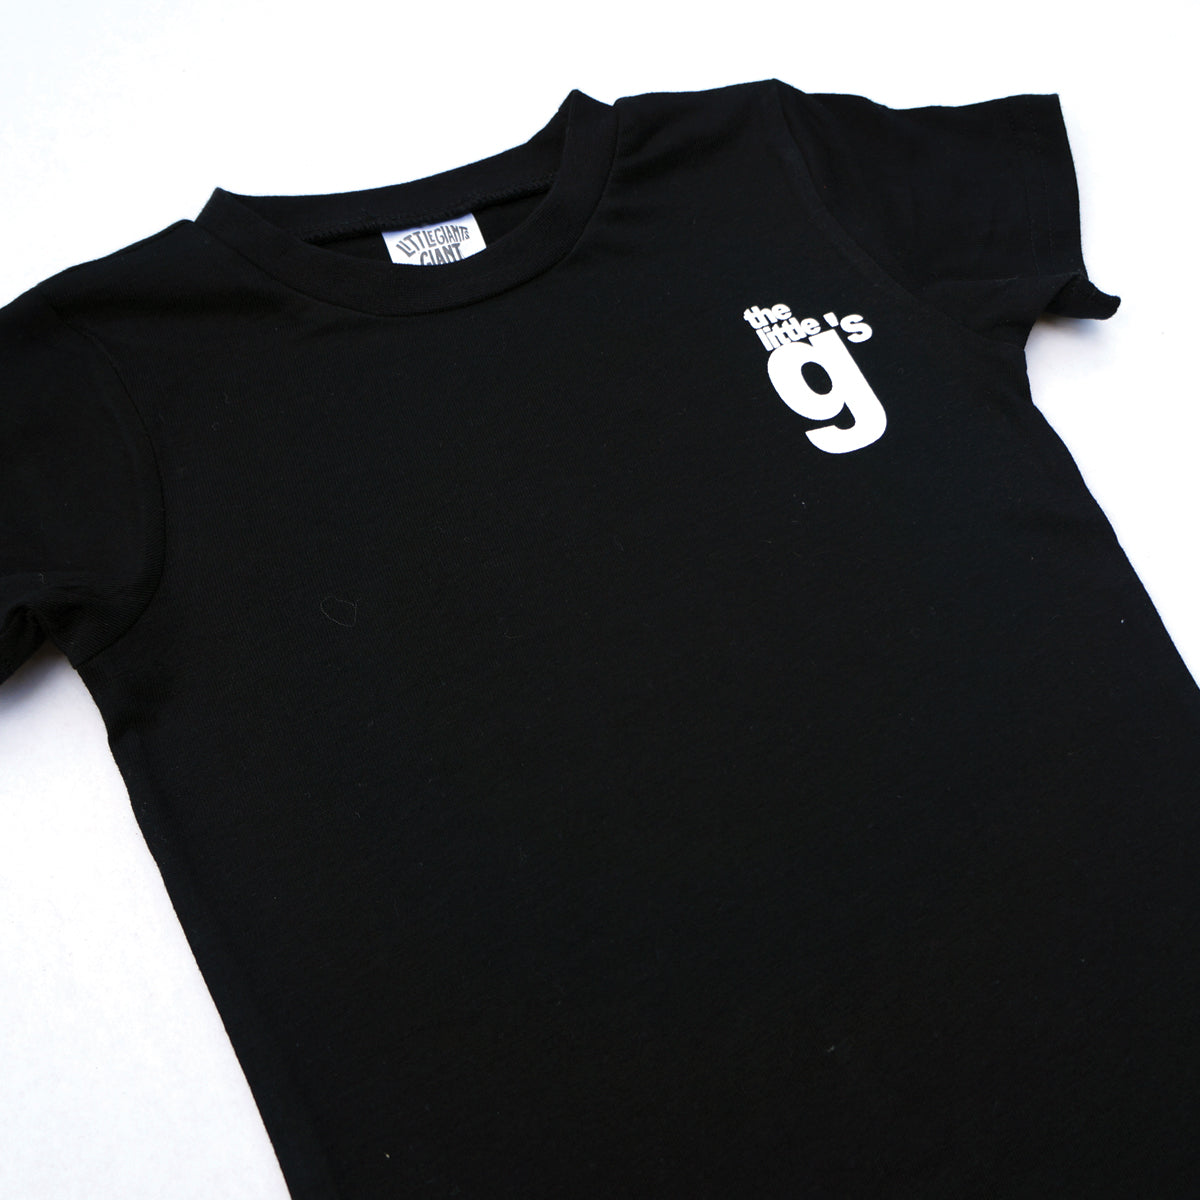 The Little g's T-shirt (Black)